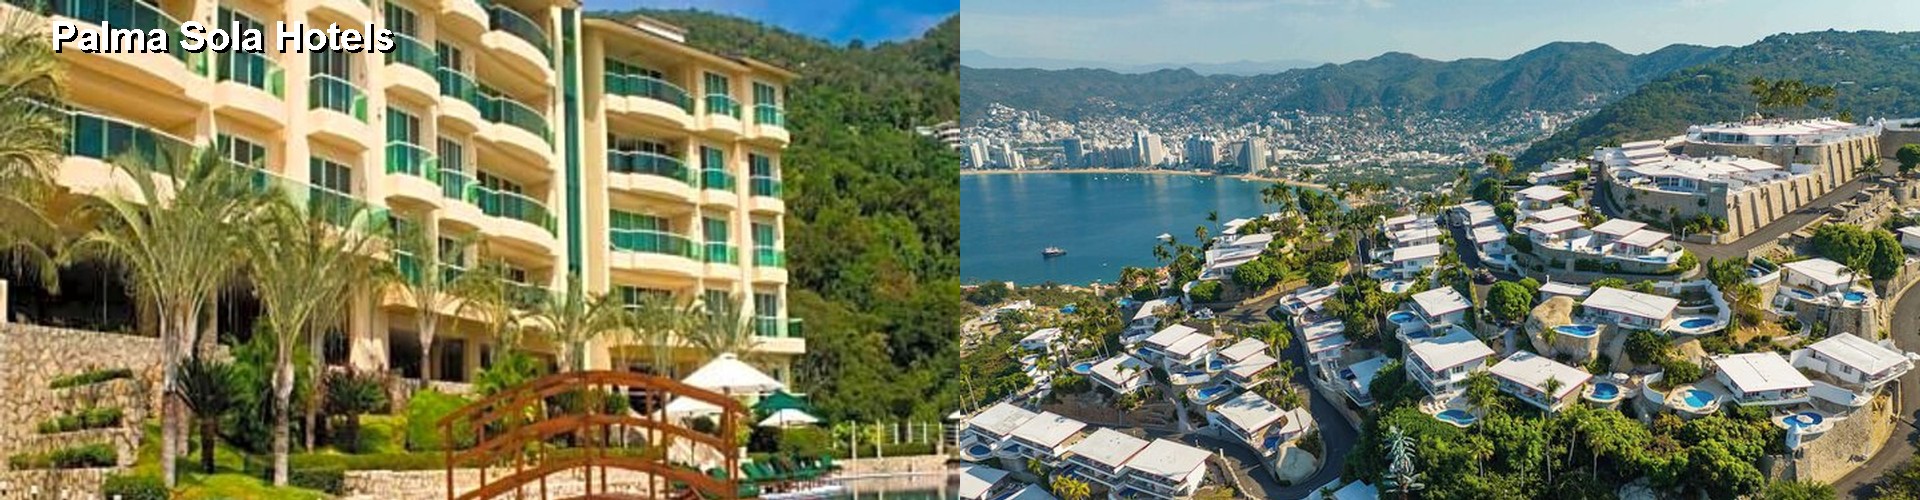 5 Best Hotels near Palma Sola